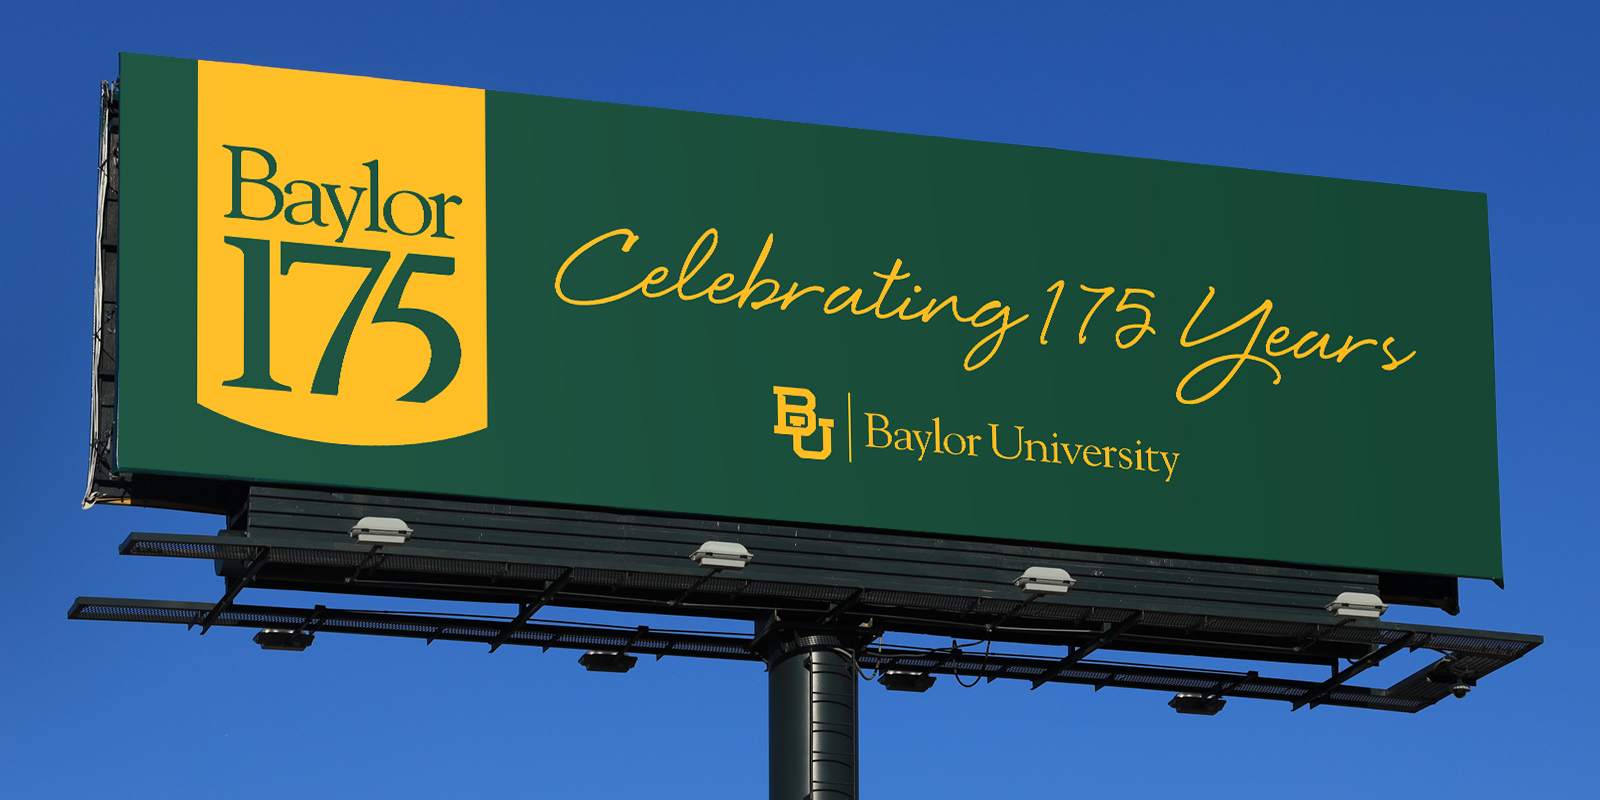 Billboard celebrating Baylor's 175th anniversary